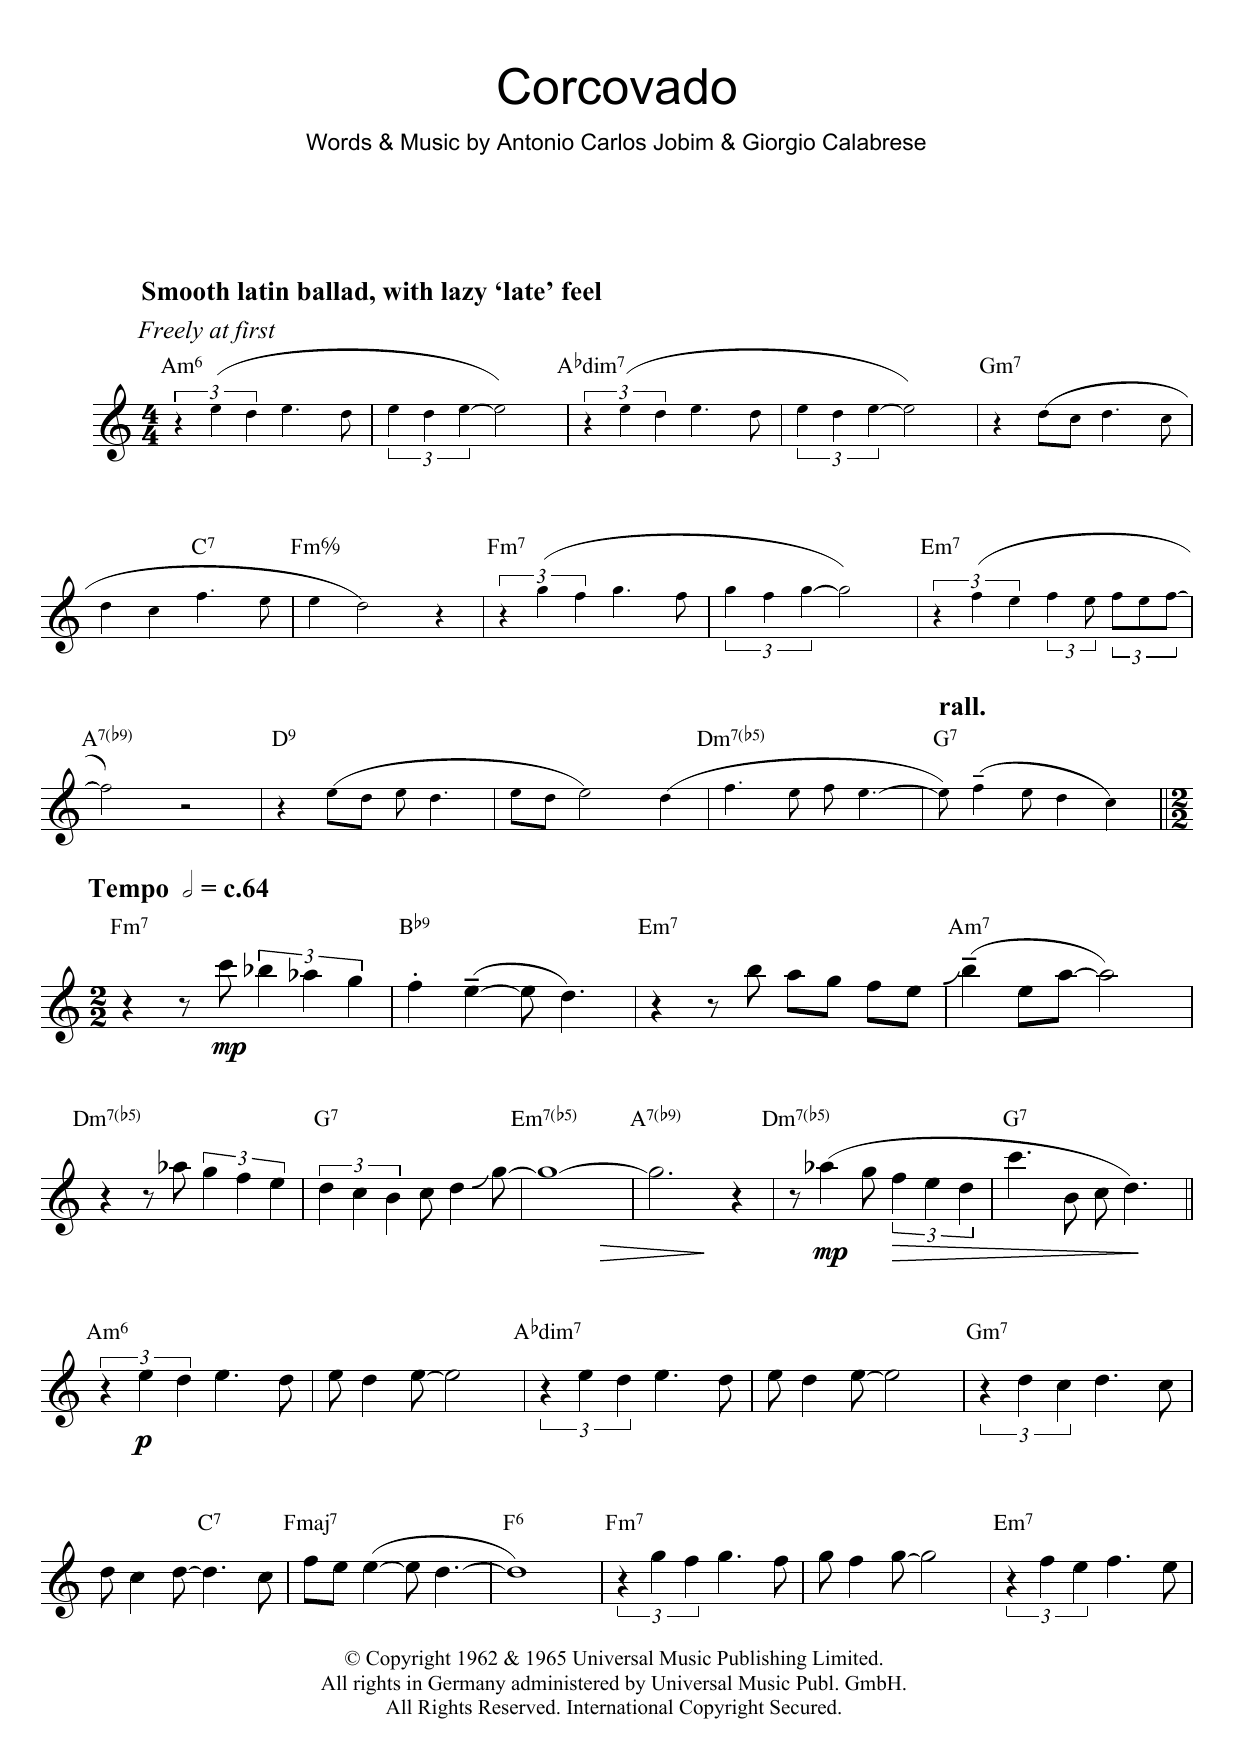 Antonio Carlos Jobim Corcovado (Quiet Nights Of Quiet Stars) Sheet Music Notes & Chords for Alto Saxophone - Download or Print PDF